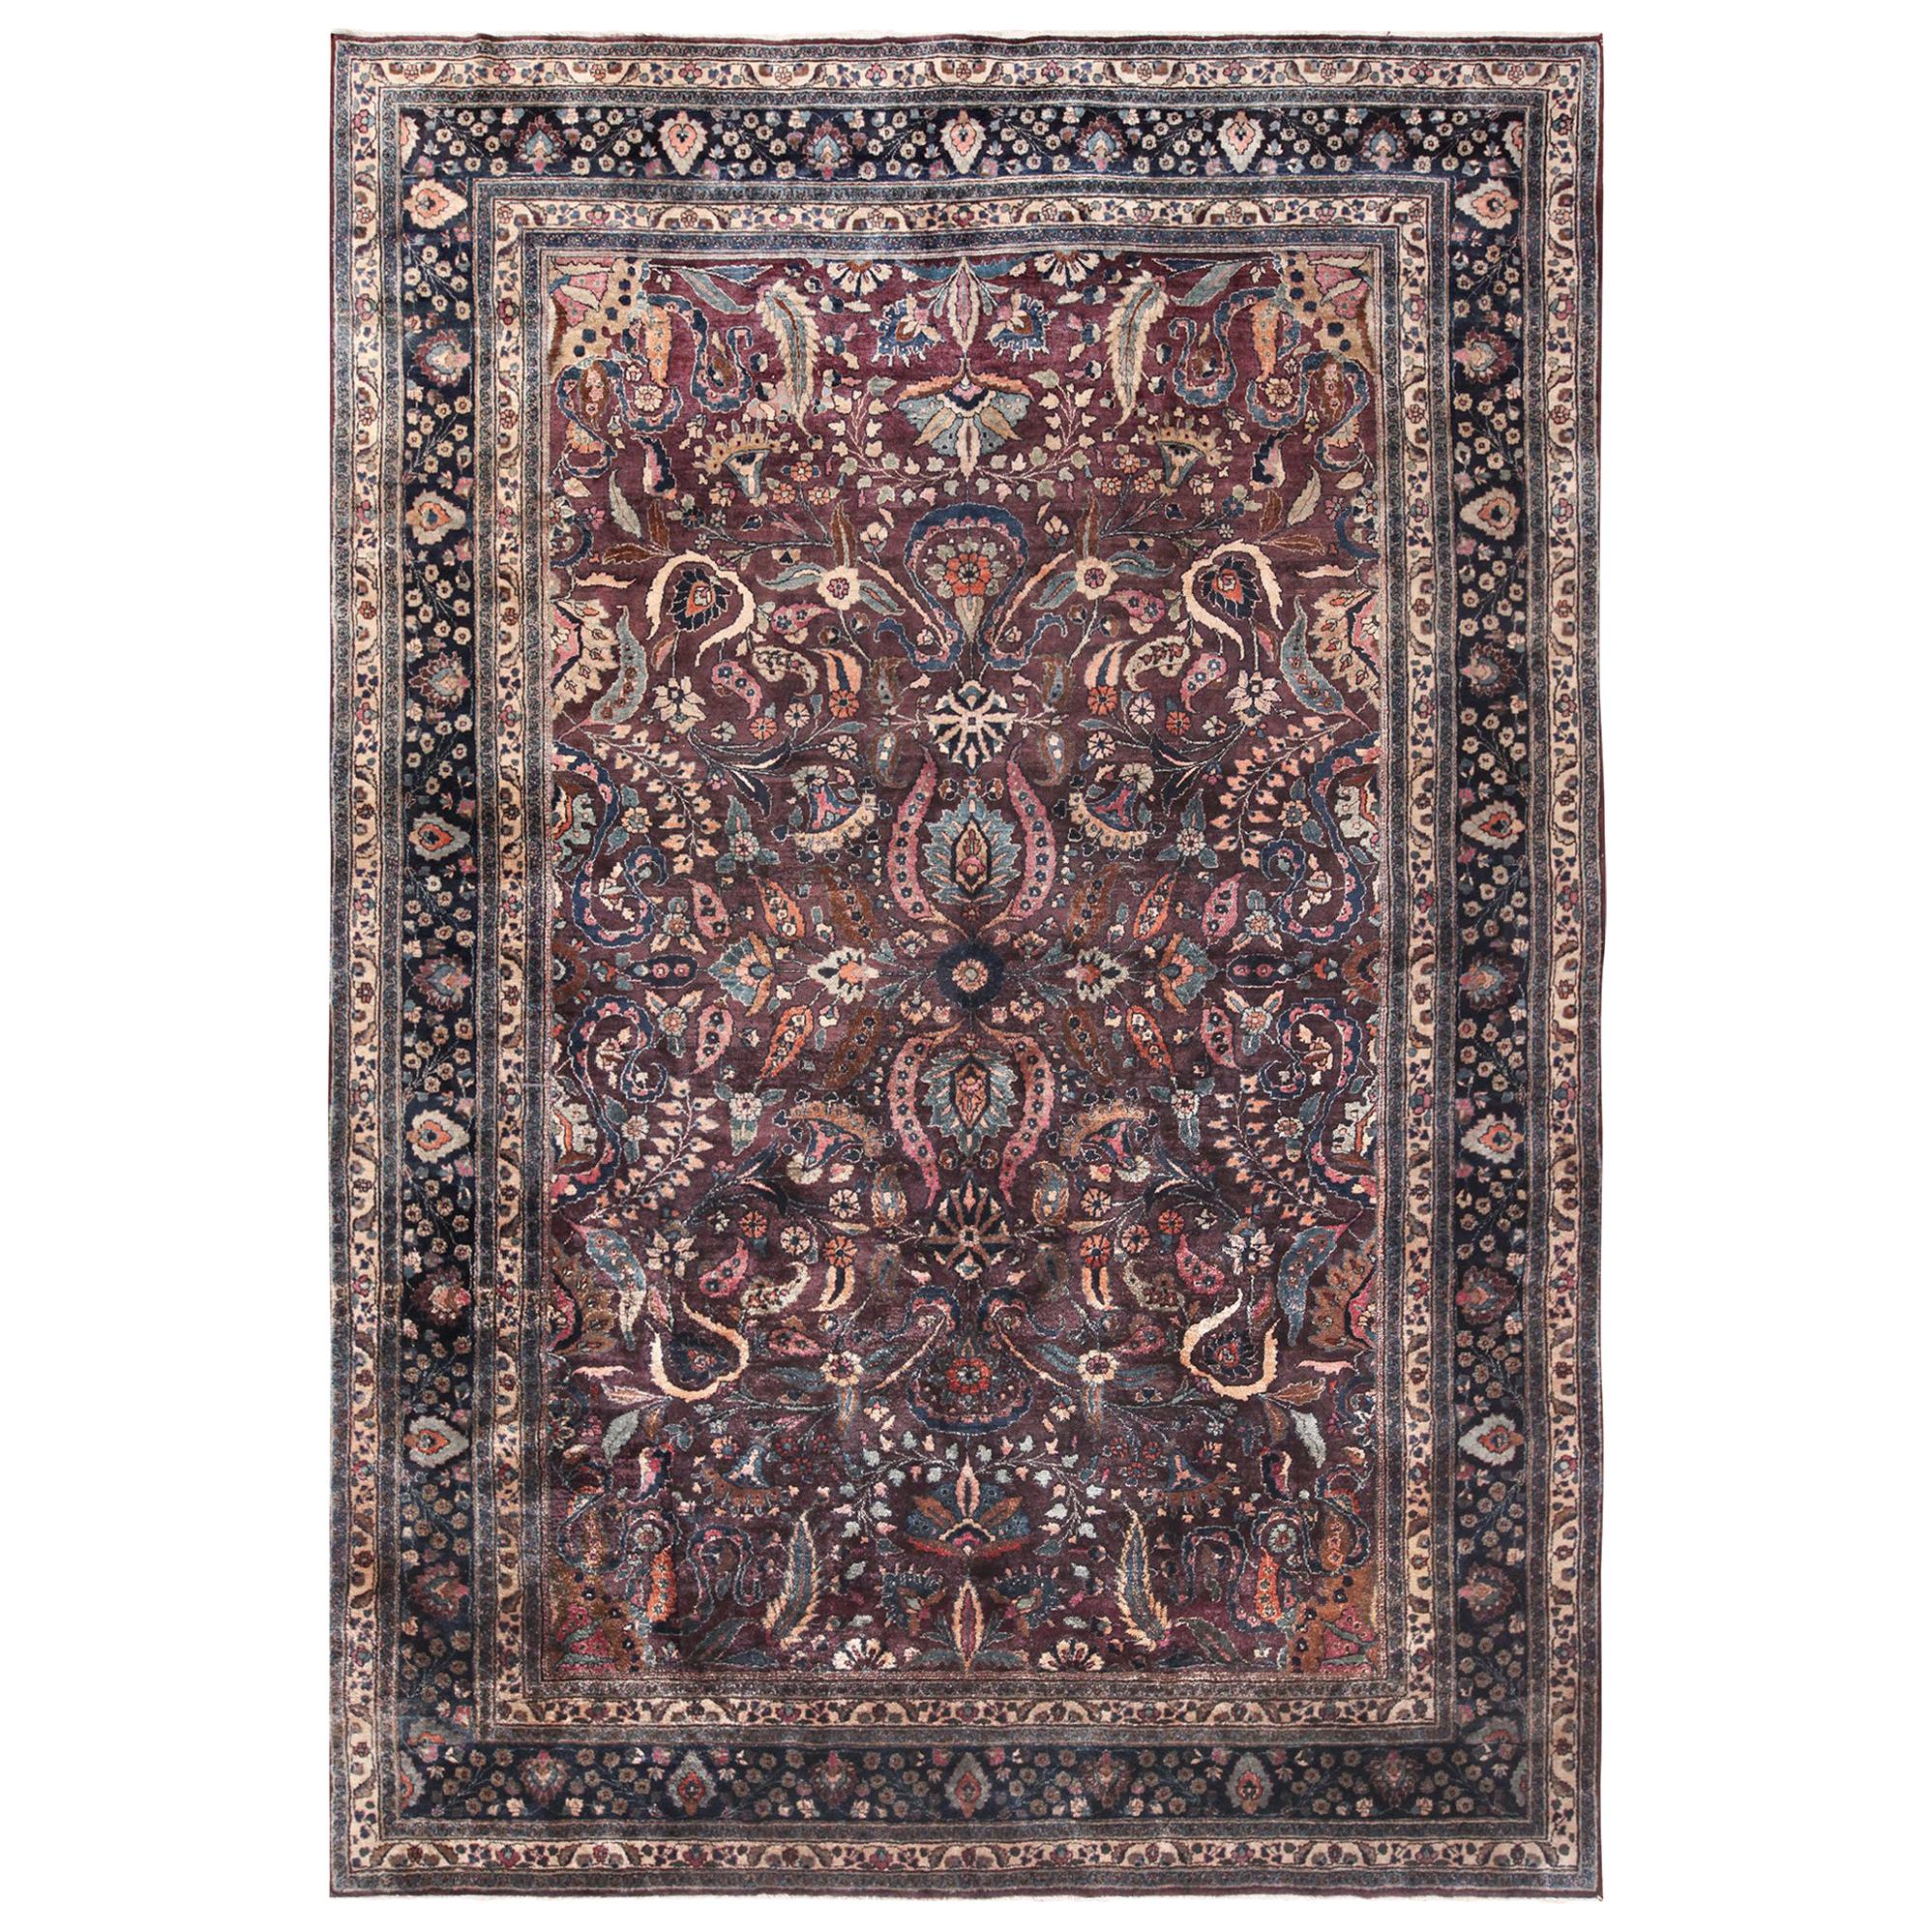 Antique Persian Khorassan Rug. Size: 10' x 14' 7" 